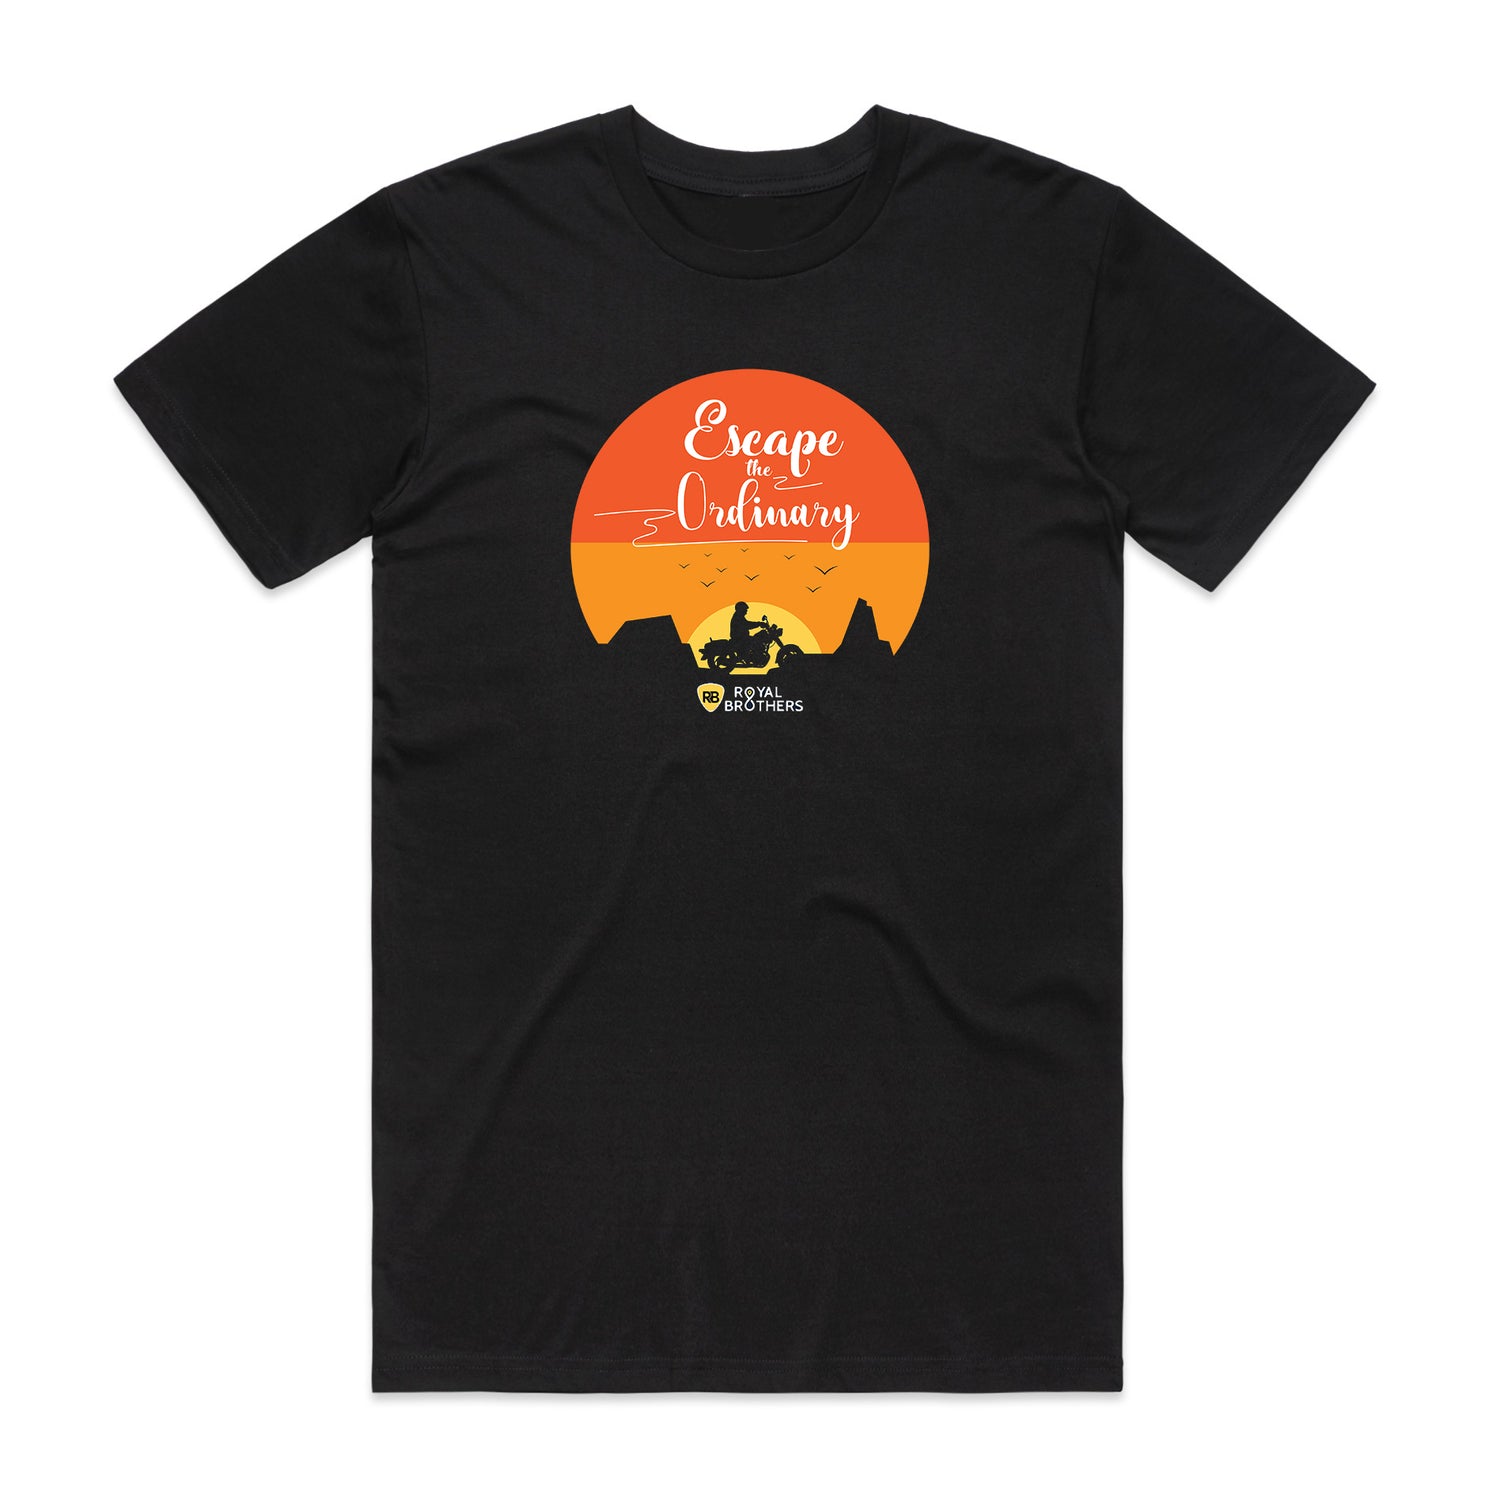 Printed unisex cotton t-shirt (Black)